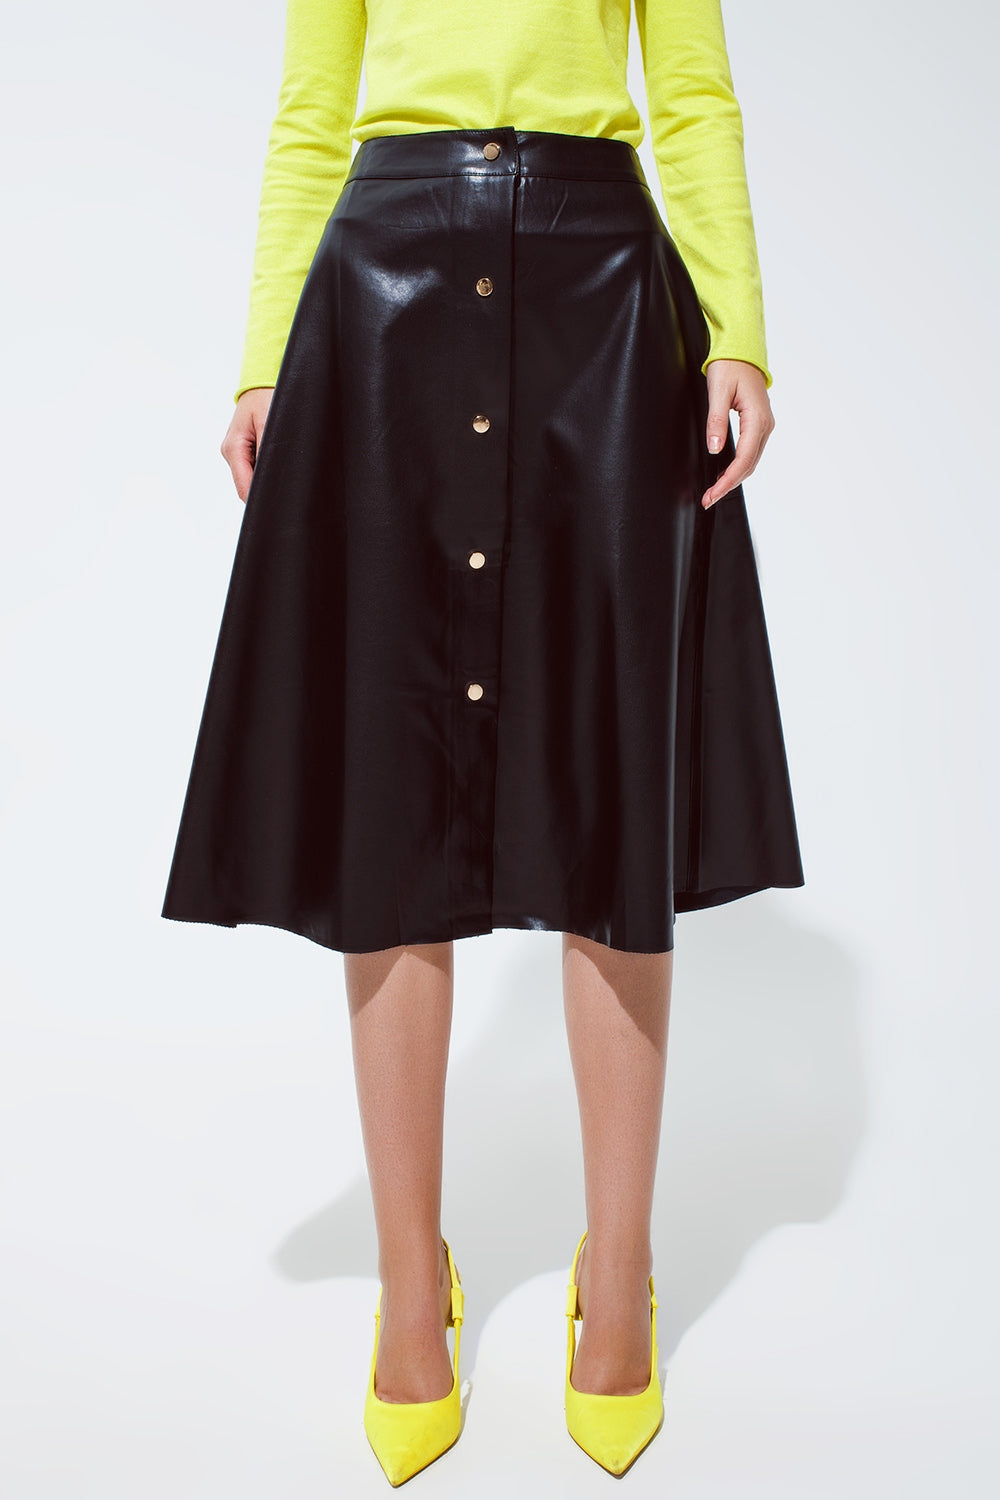 TEEK - Black Leatherette Buttoned Skirt SKIRT TEEK M Small  